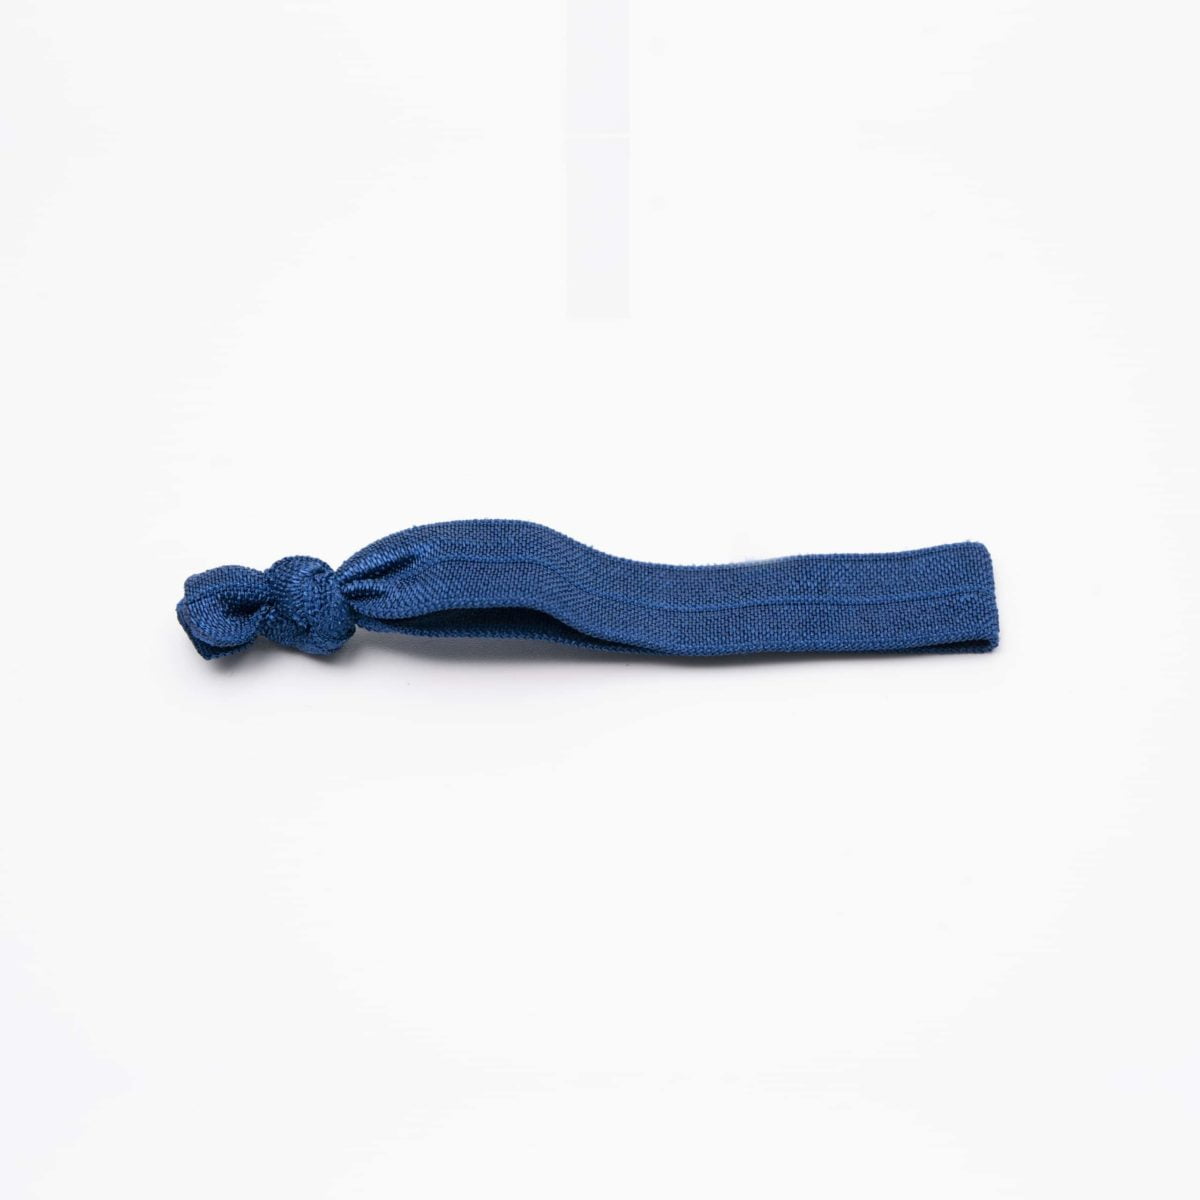 Blueberry Hair Tie Set - Blue